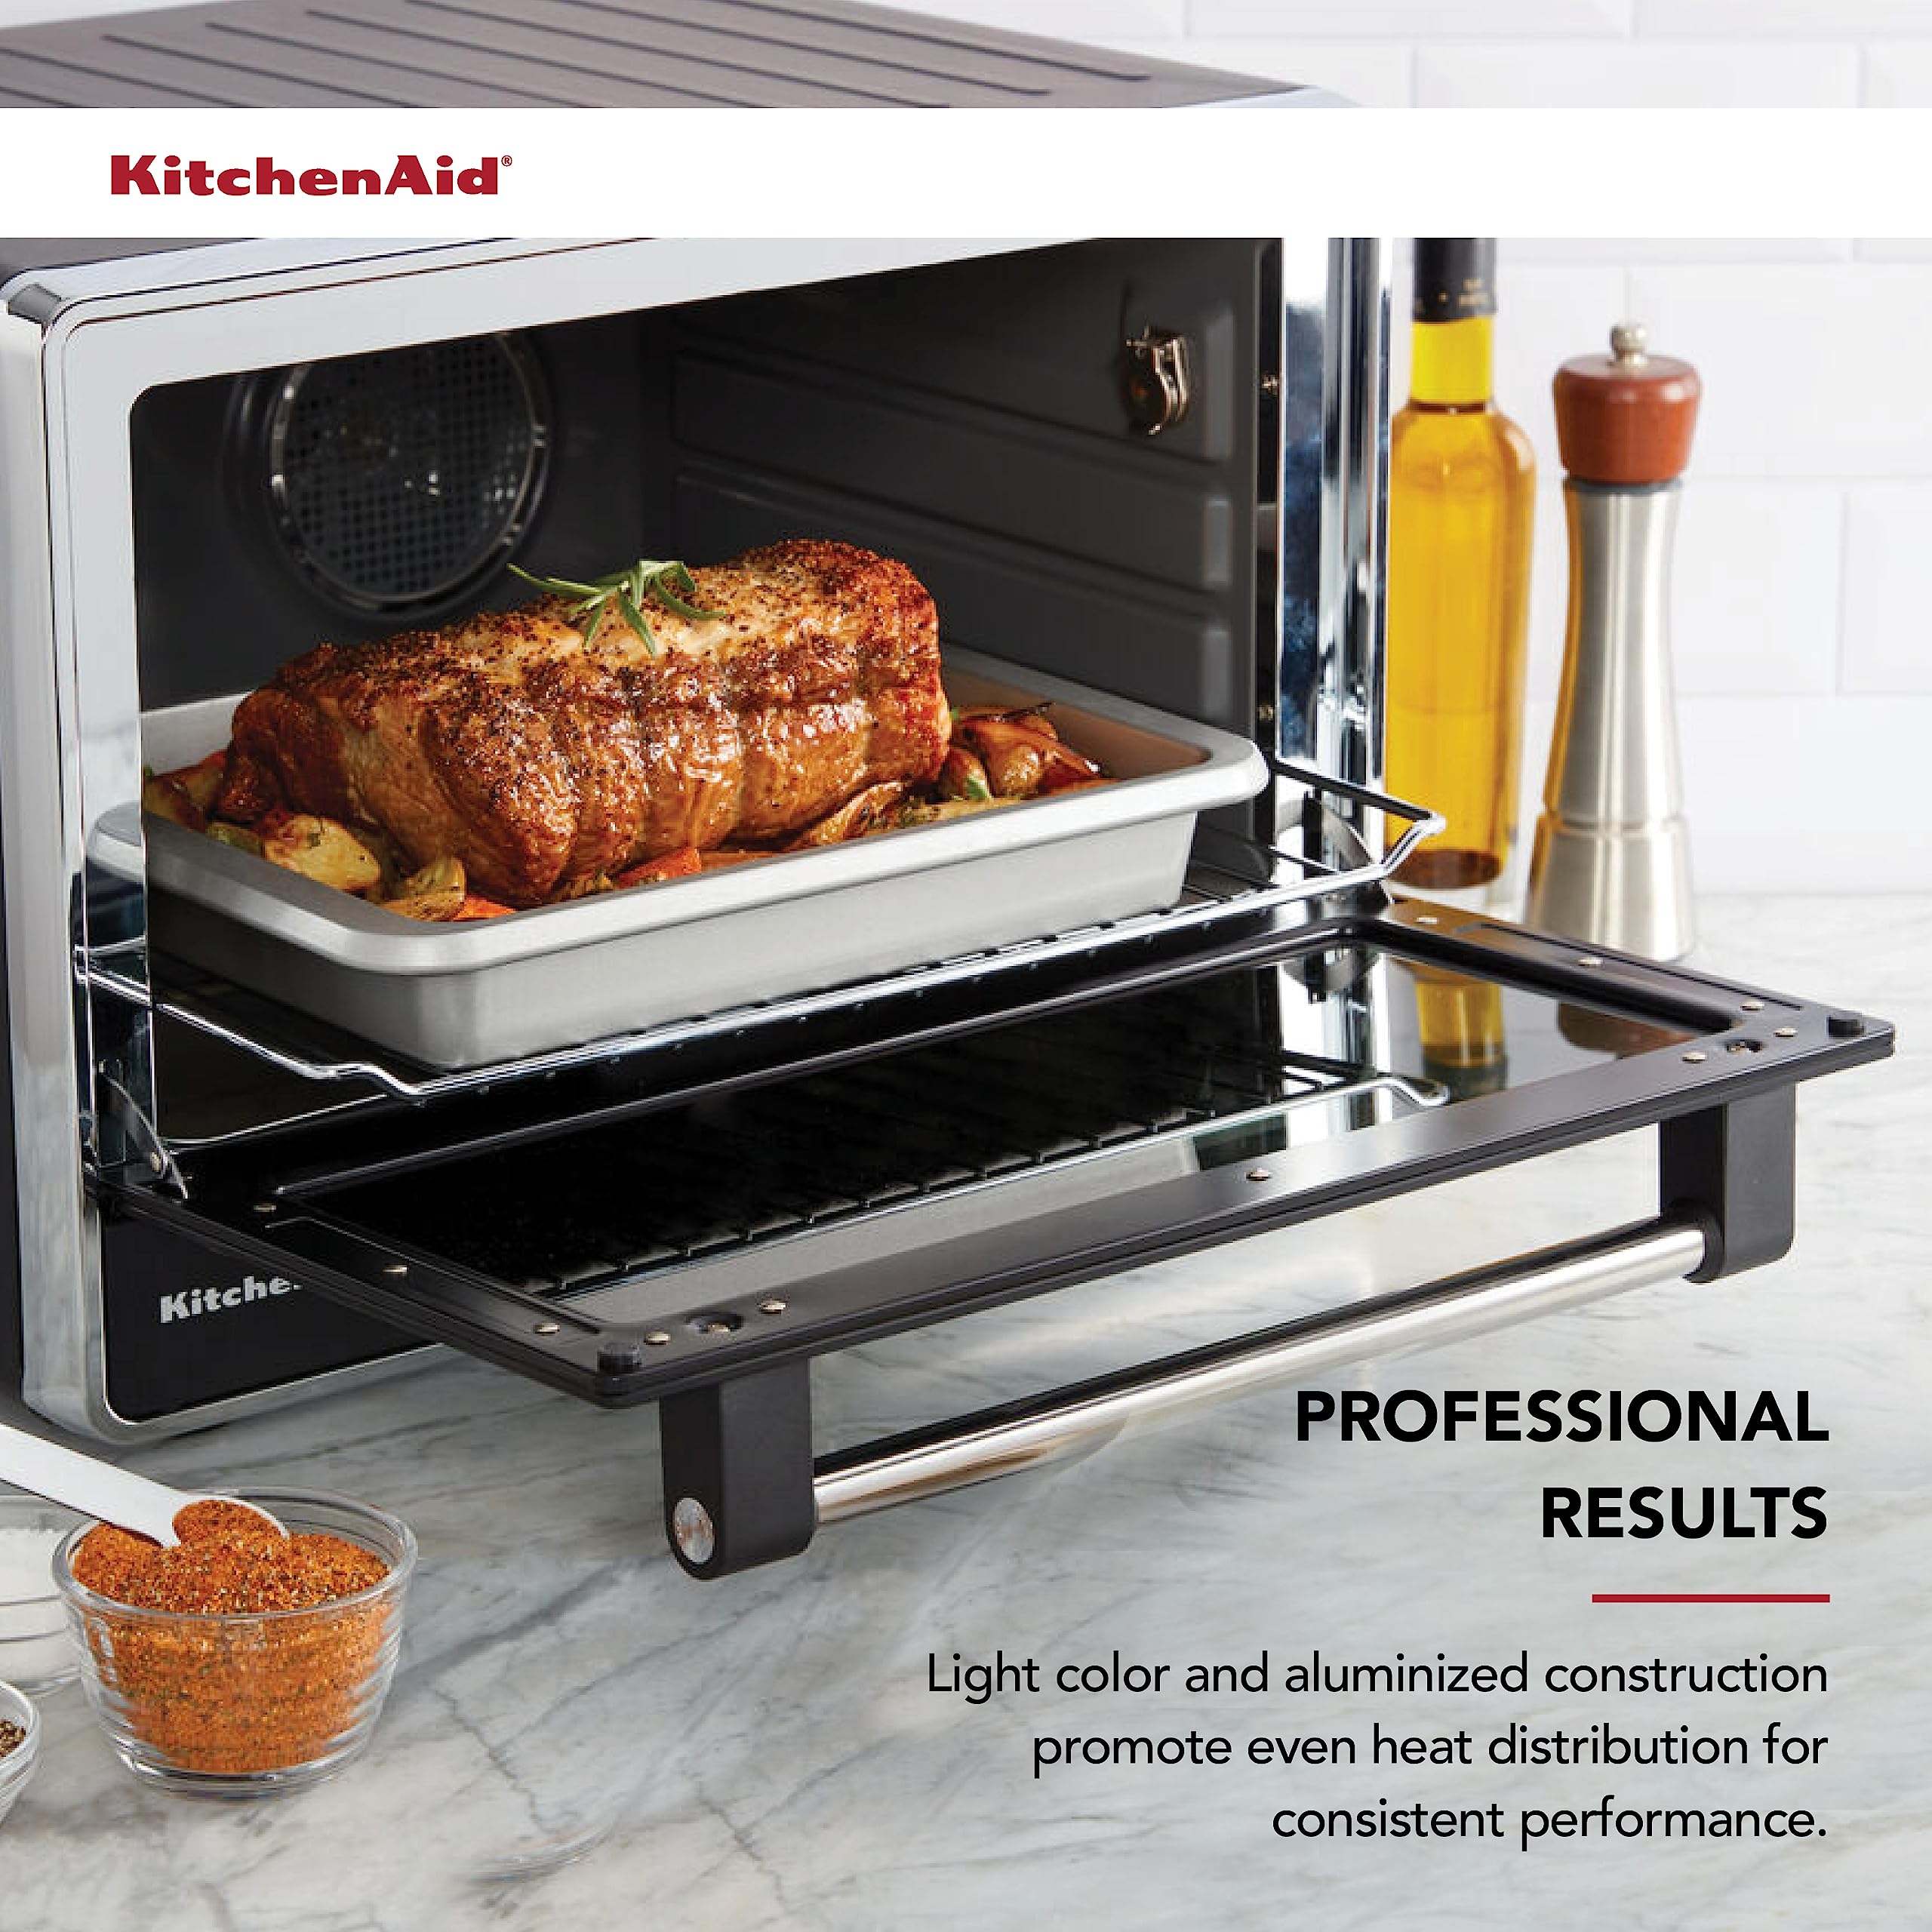 KitchenAid Countertop Oven Rectangular Baker, 12.3 x 10 Inch, Silver